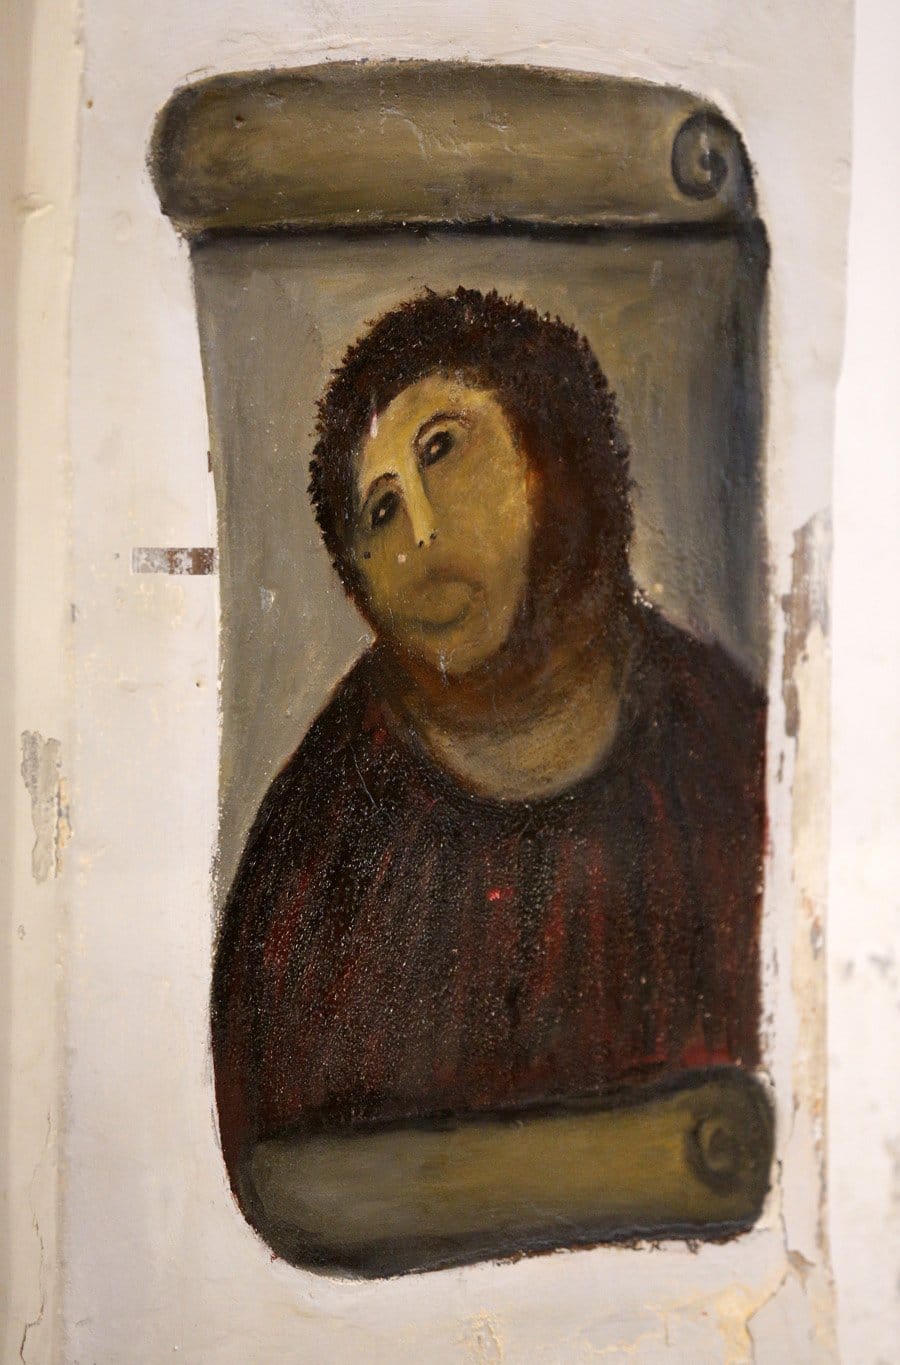 A close-up of the "restored" Ecce Homo